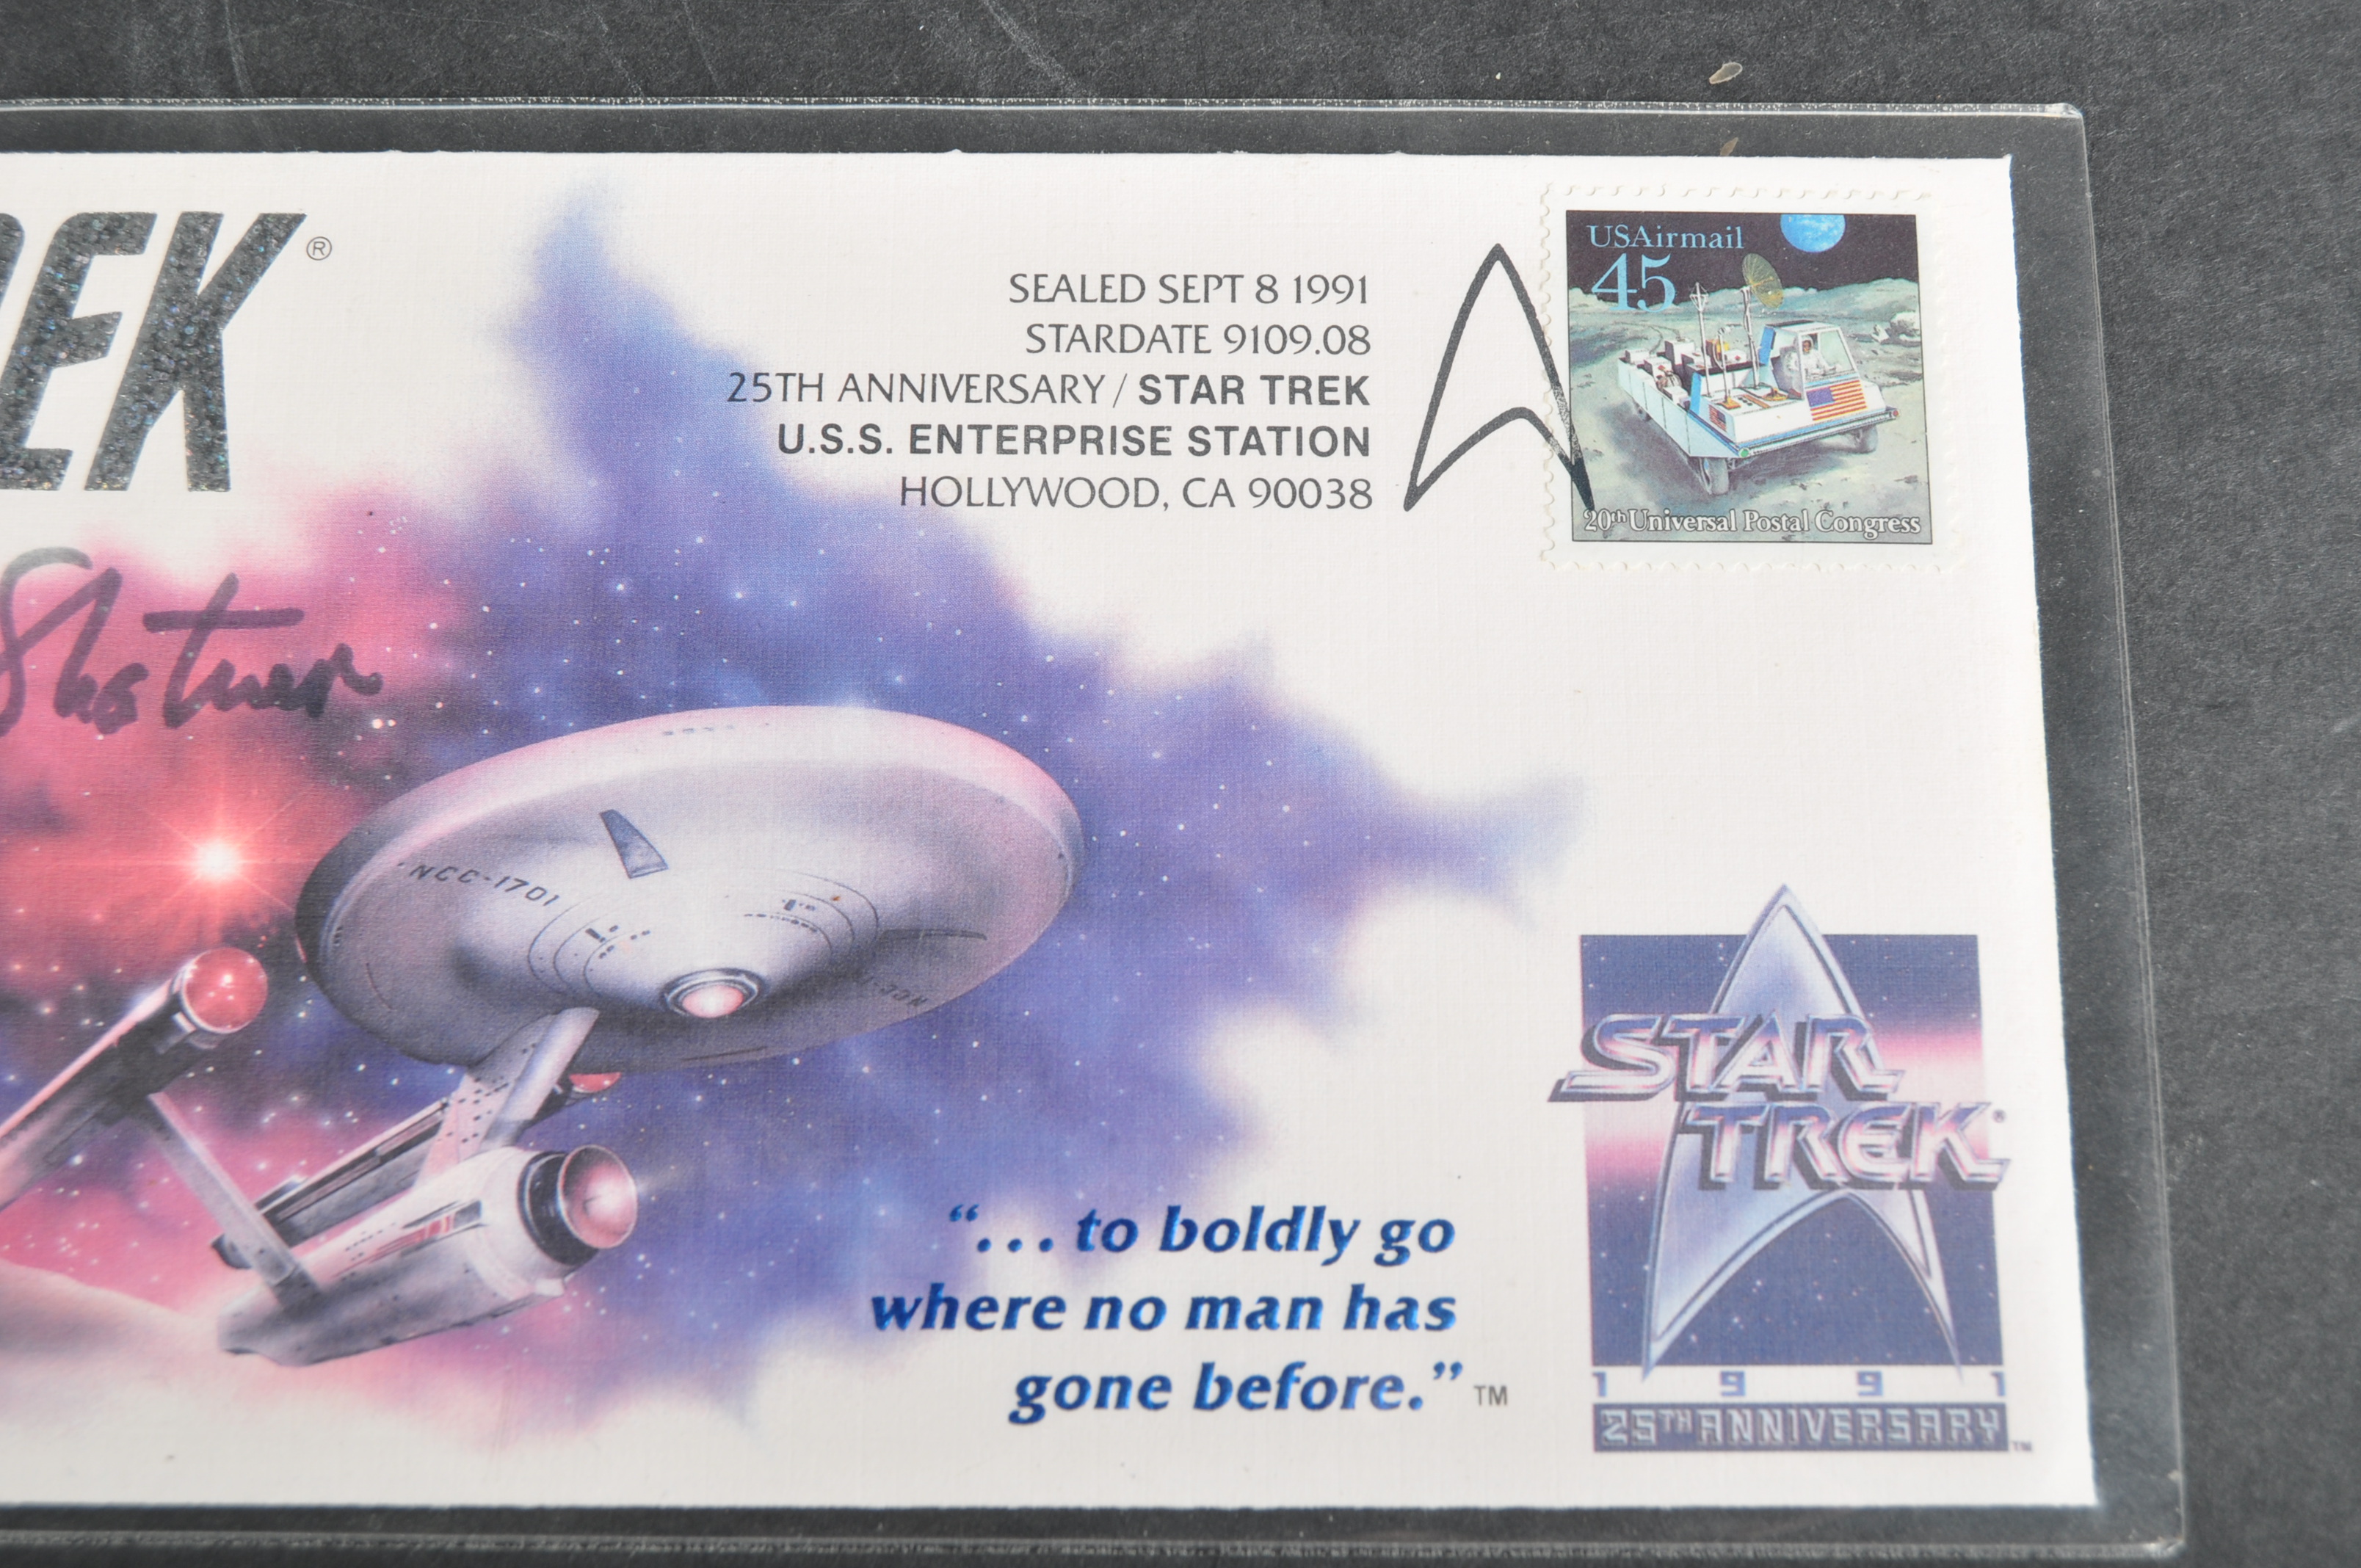 STAR TREK - WILLIAM SHATNER (CAPT. KIRK) - AUTOGRAPHED FDC - Image 3 of 4